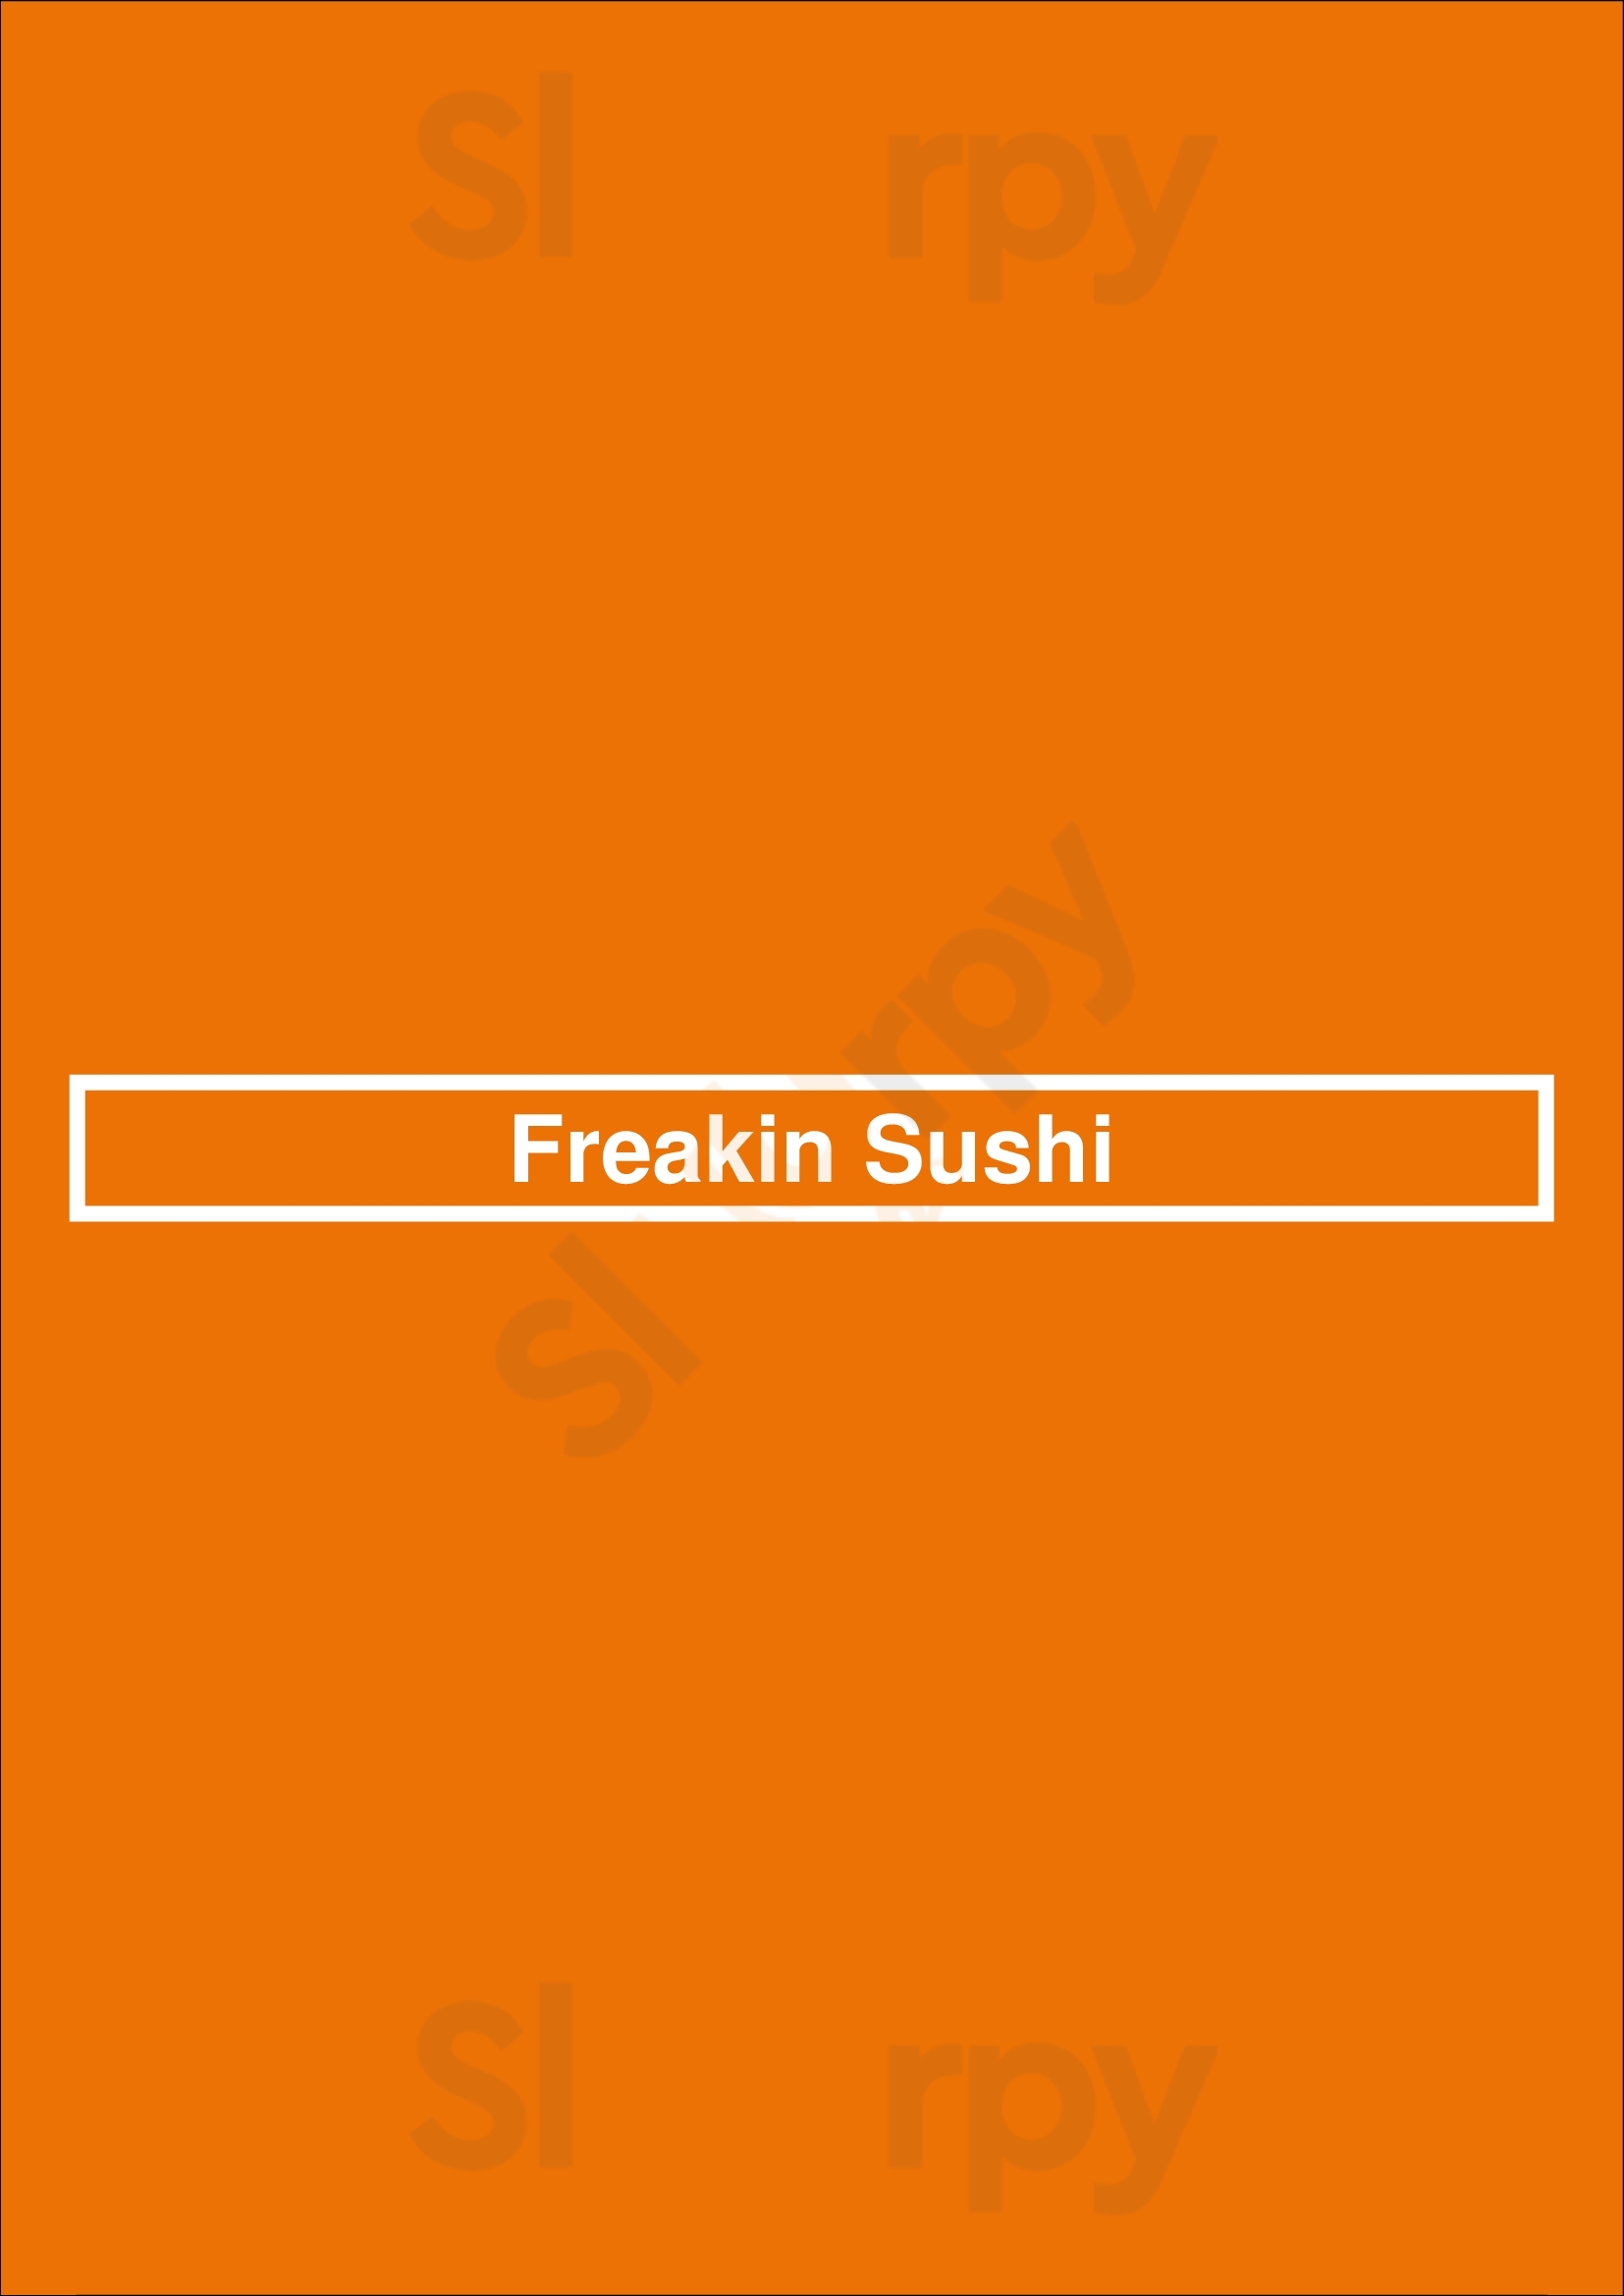 Freakin Sushi Buenos Aires Menu - 1